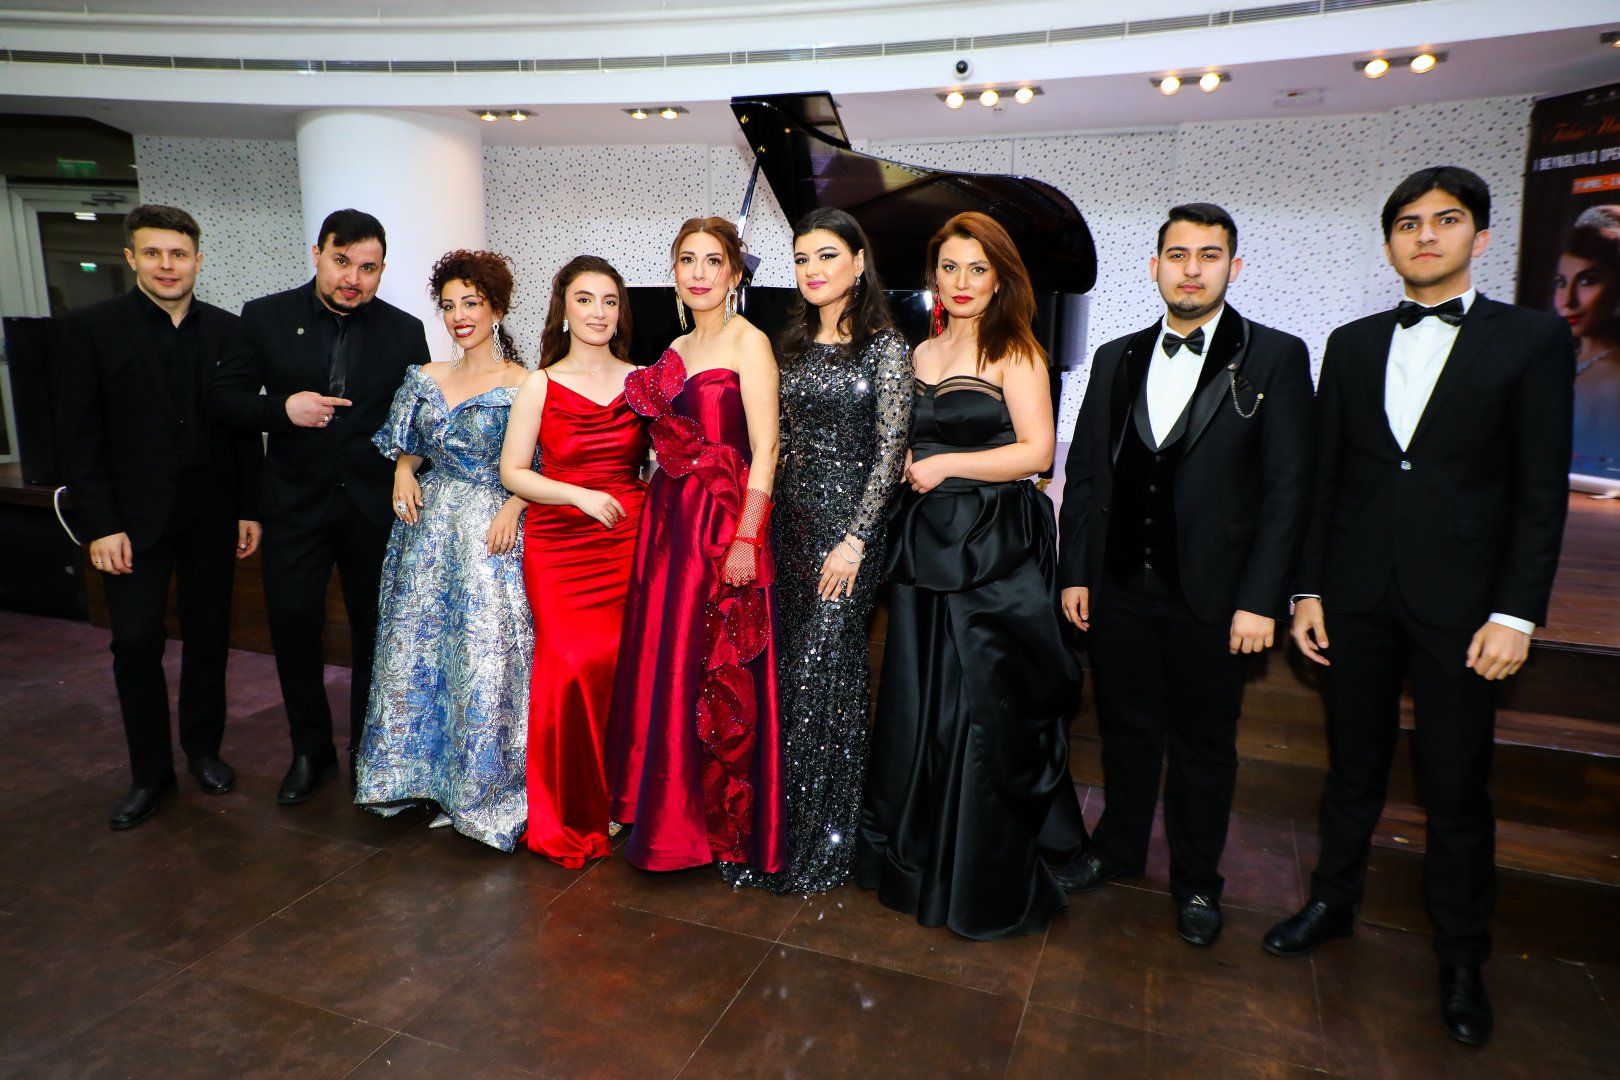 Classical music concert in Baku gathers world opera stars [PHOTOS]